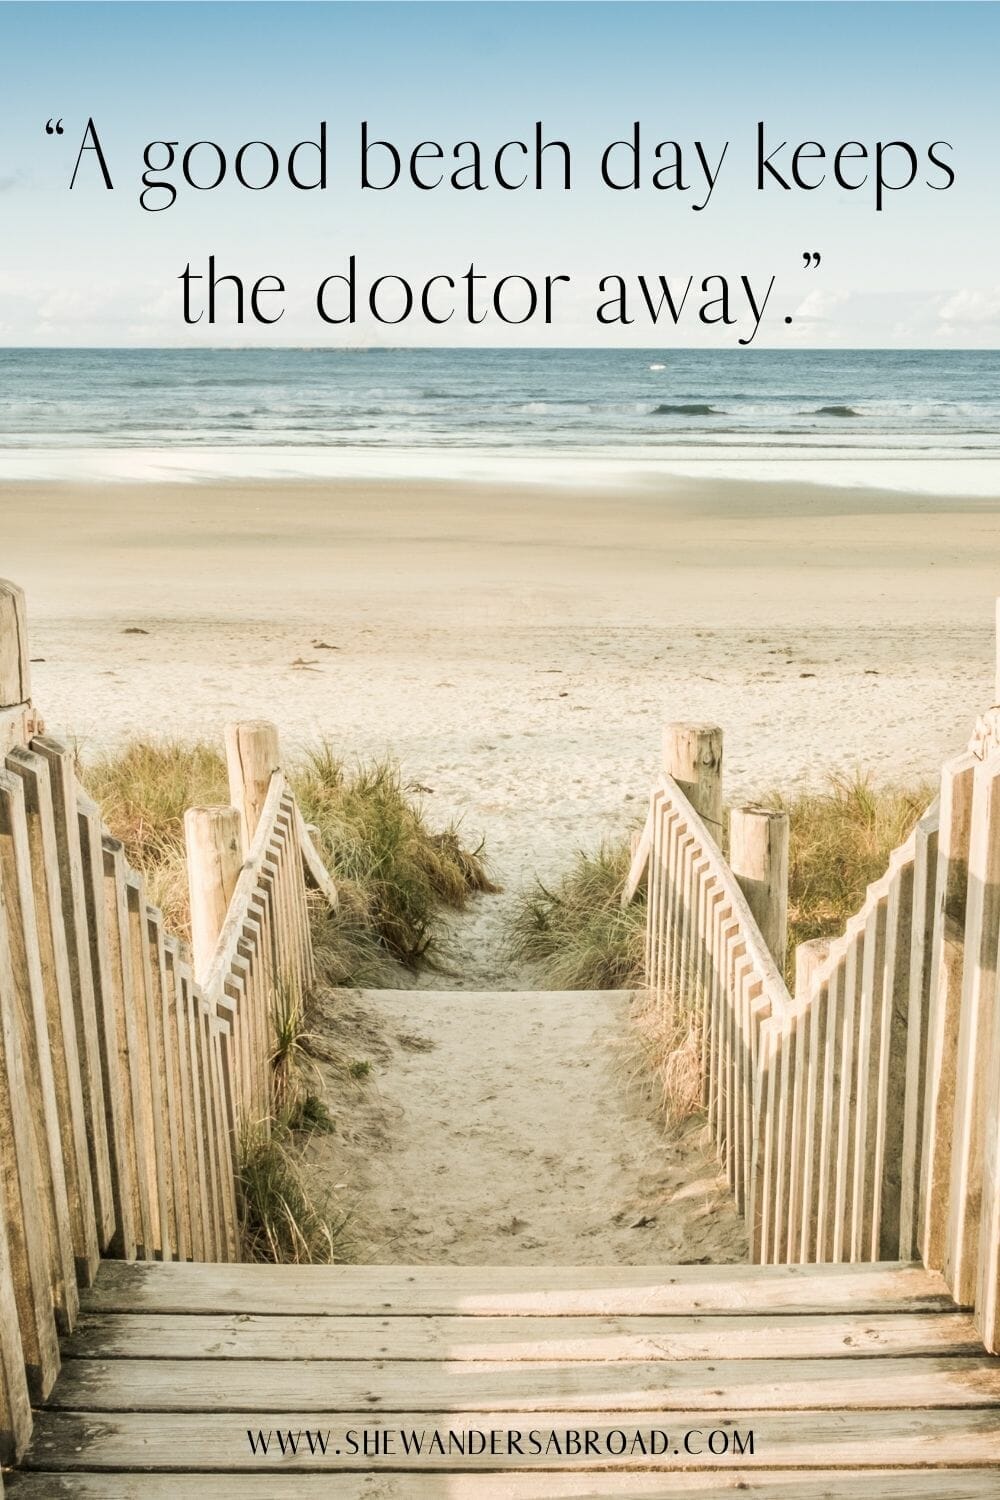 Cute beach captions for Instagram